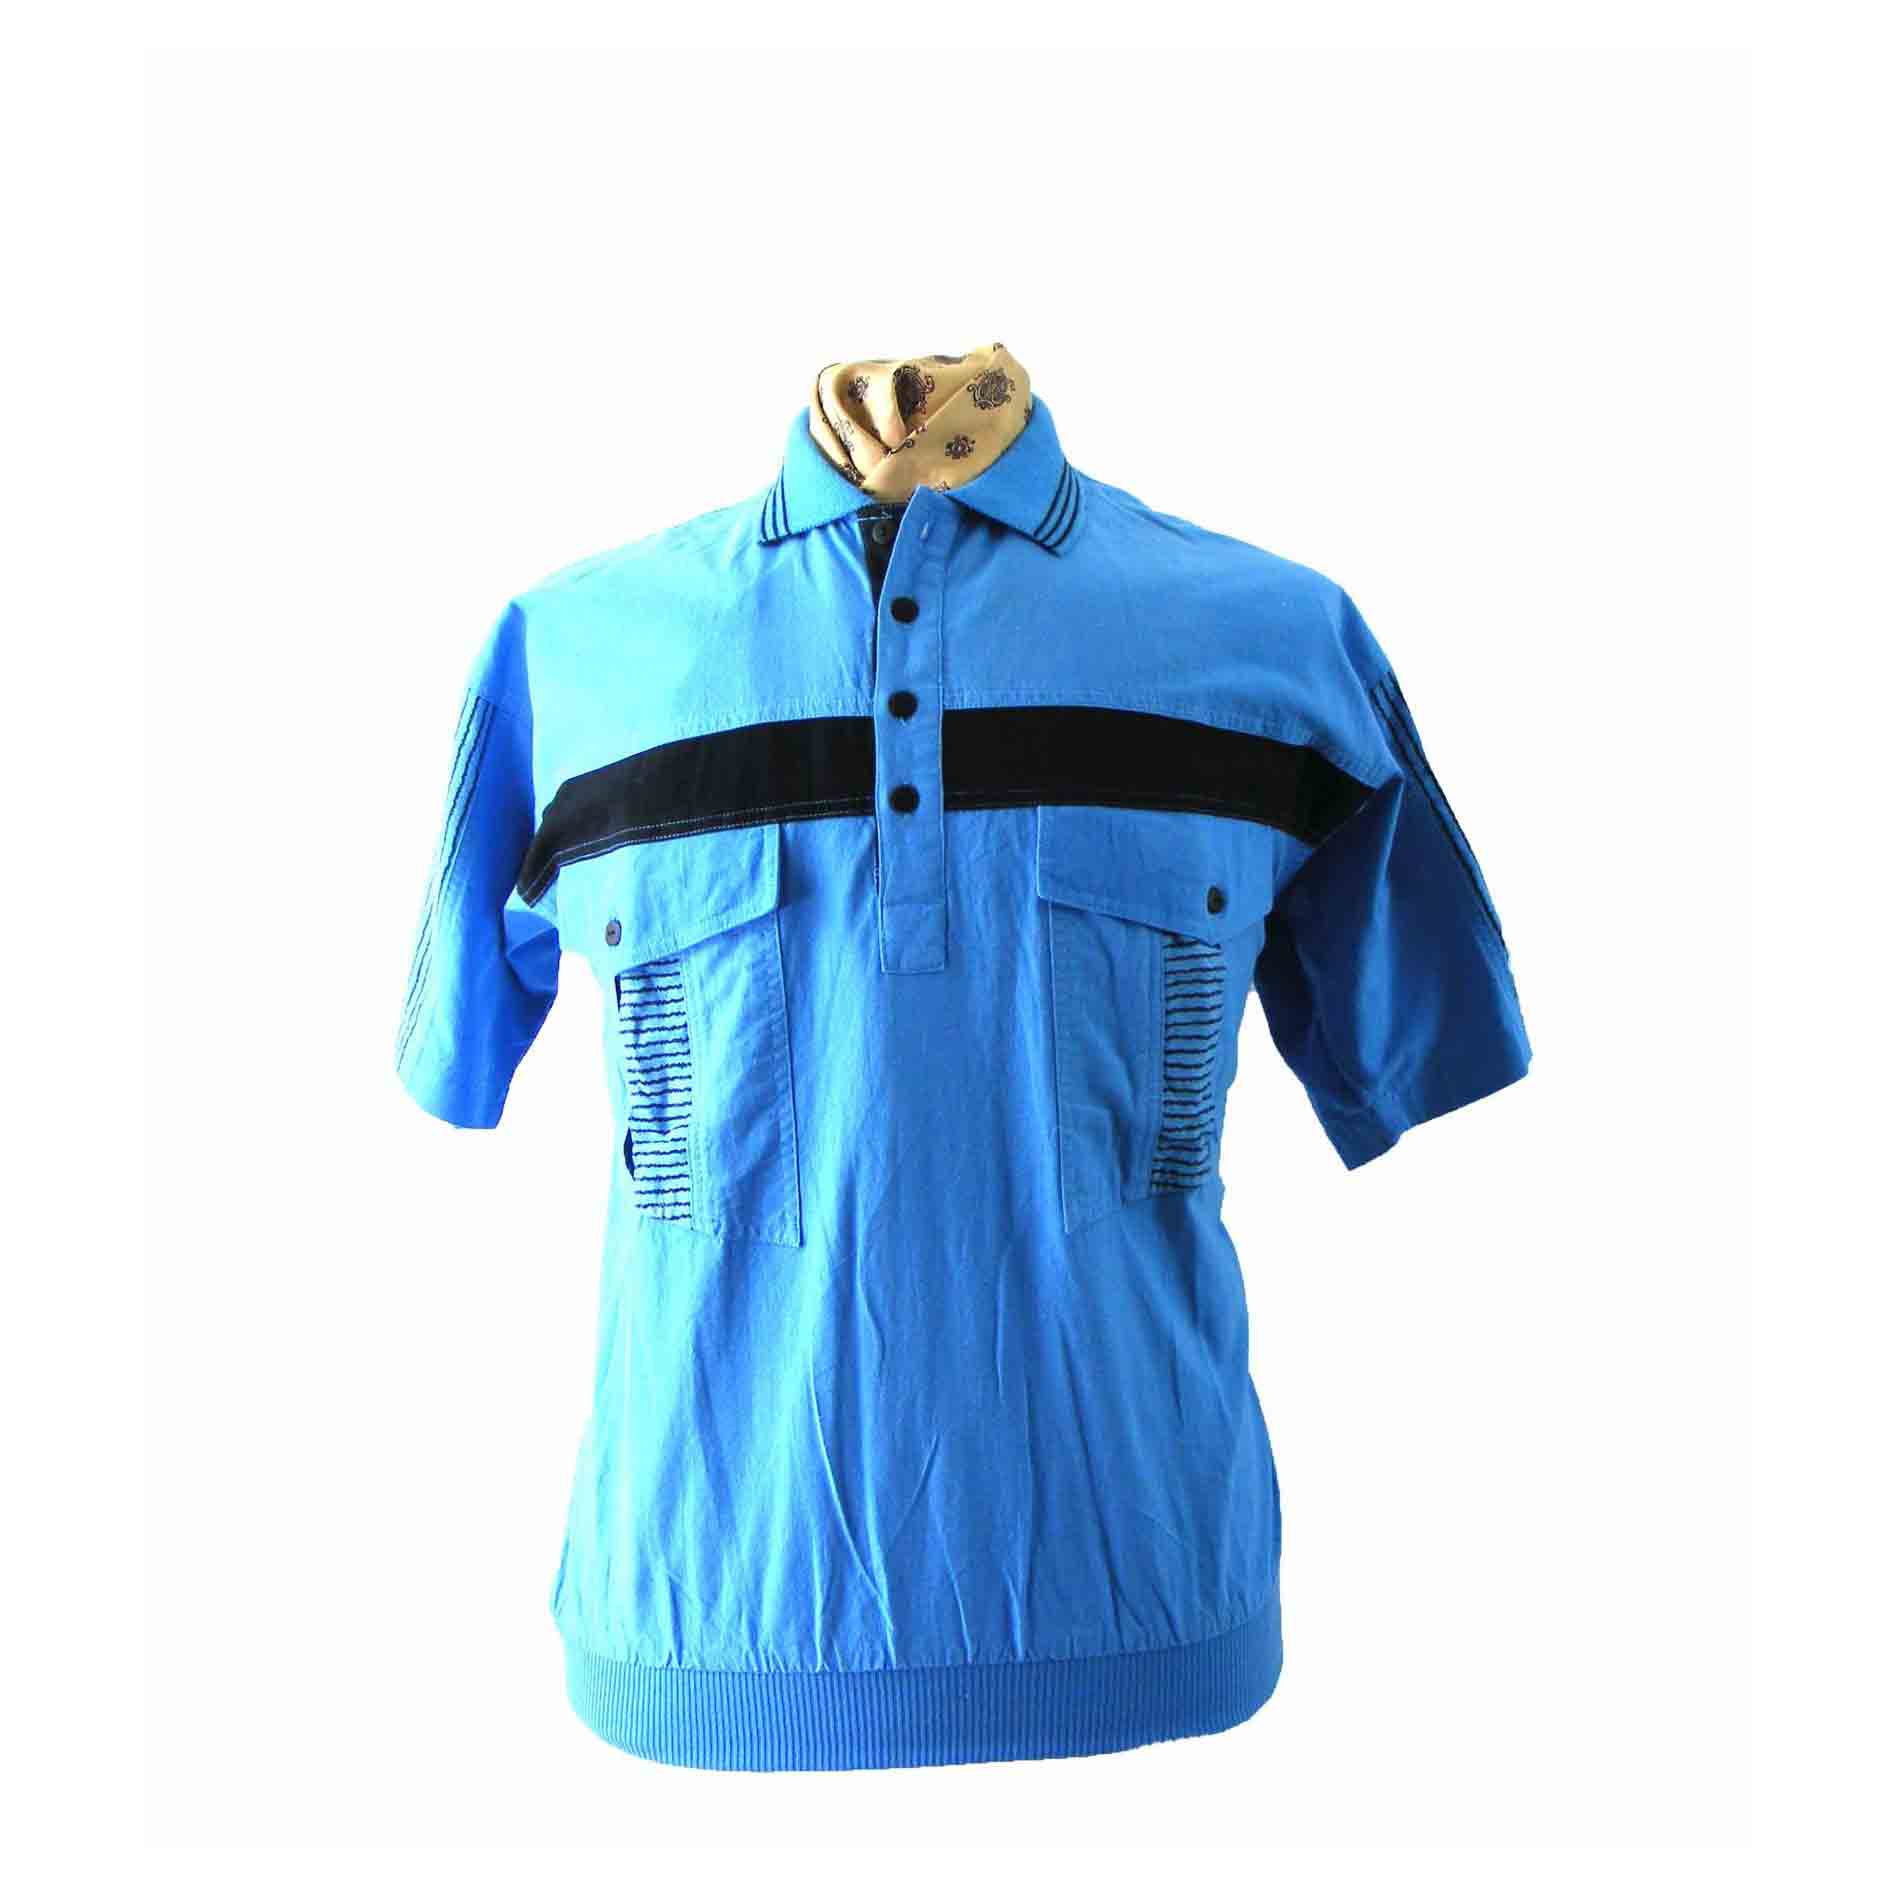 80s Blue Casual Shirt - M - Blue 17 Vintage Clothing